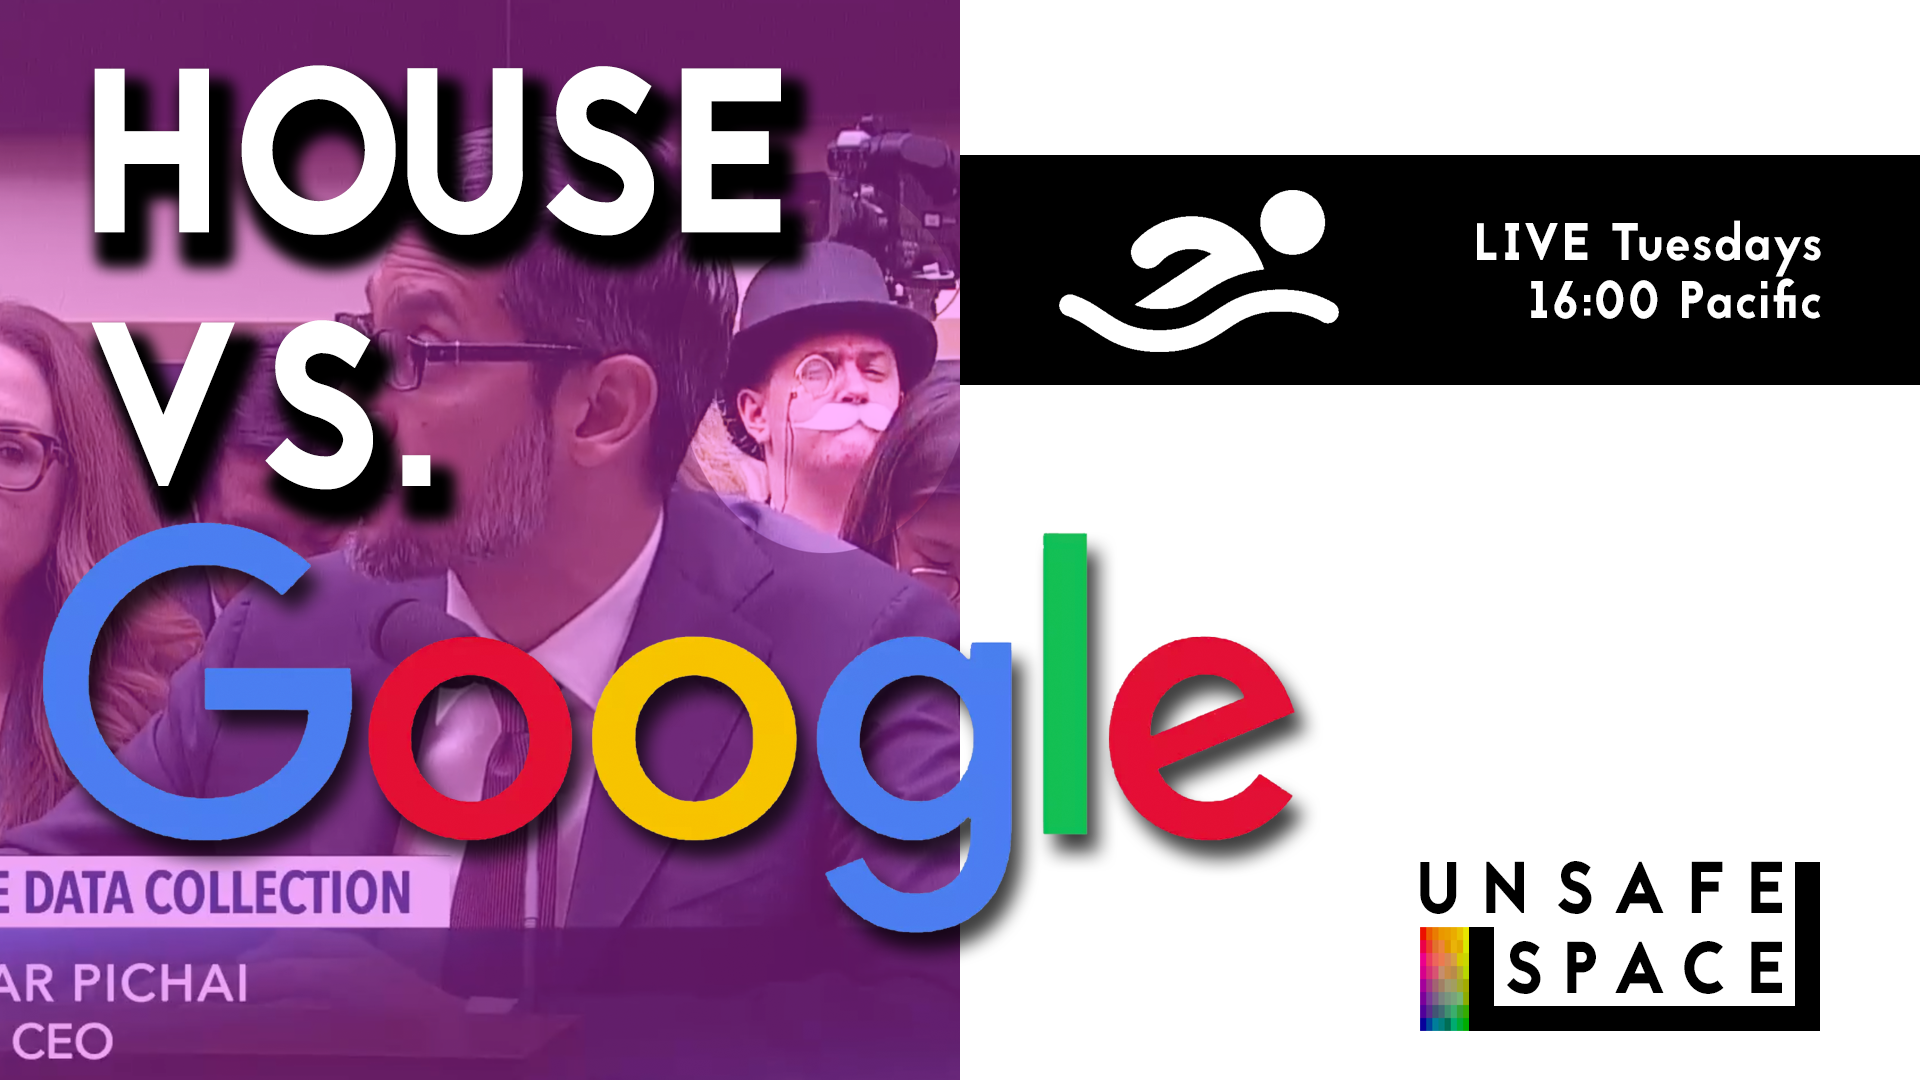 [Live: Episode 042] Upstream: The US House vs. Google